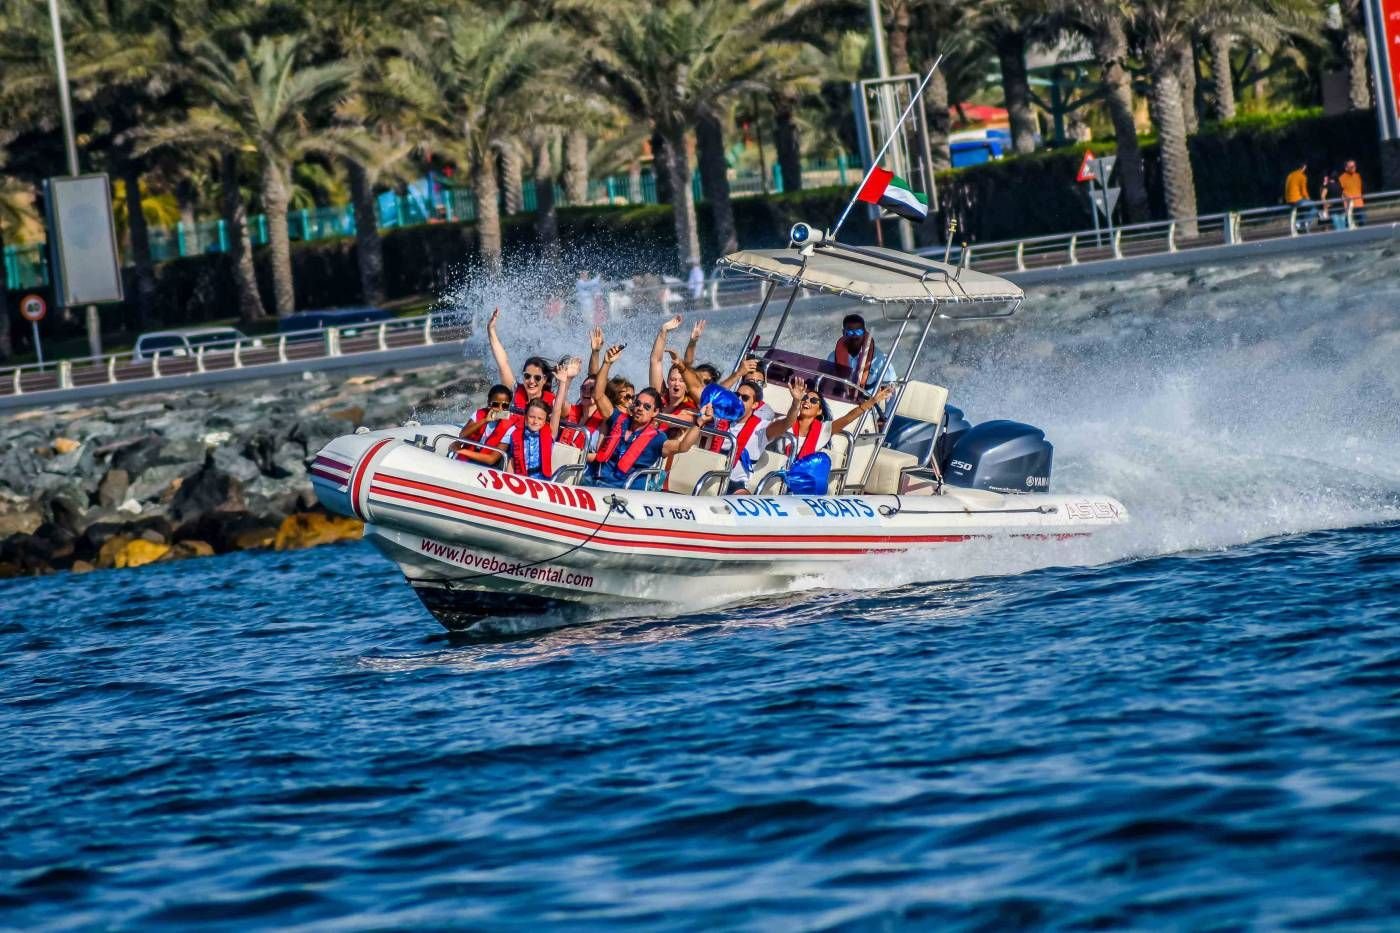 Love Boat Dubai